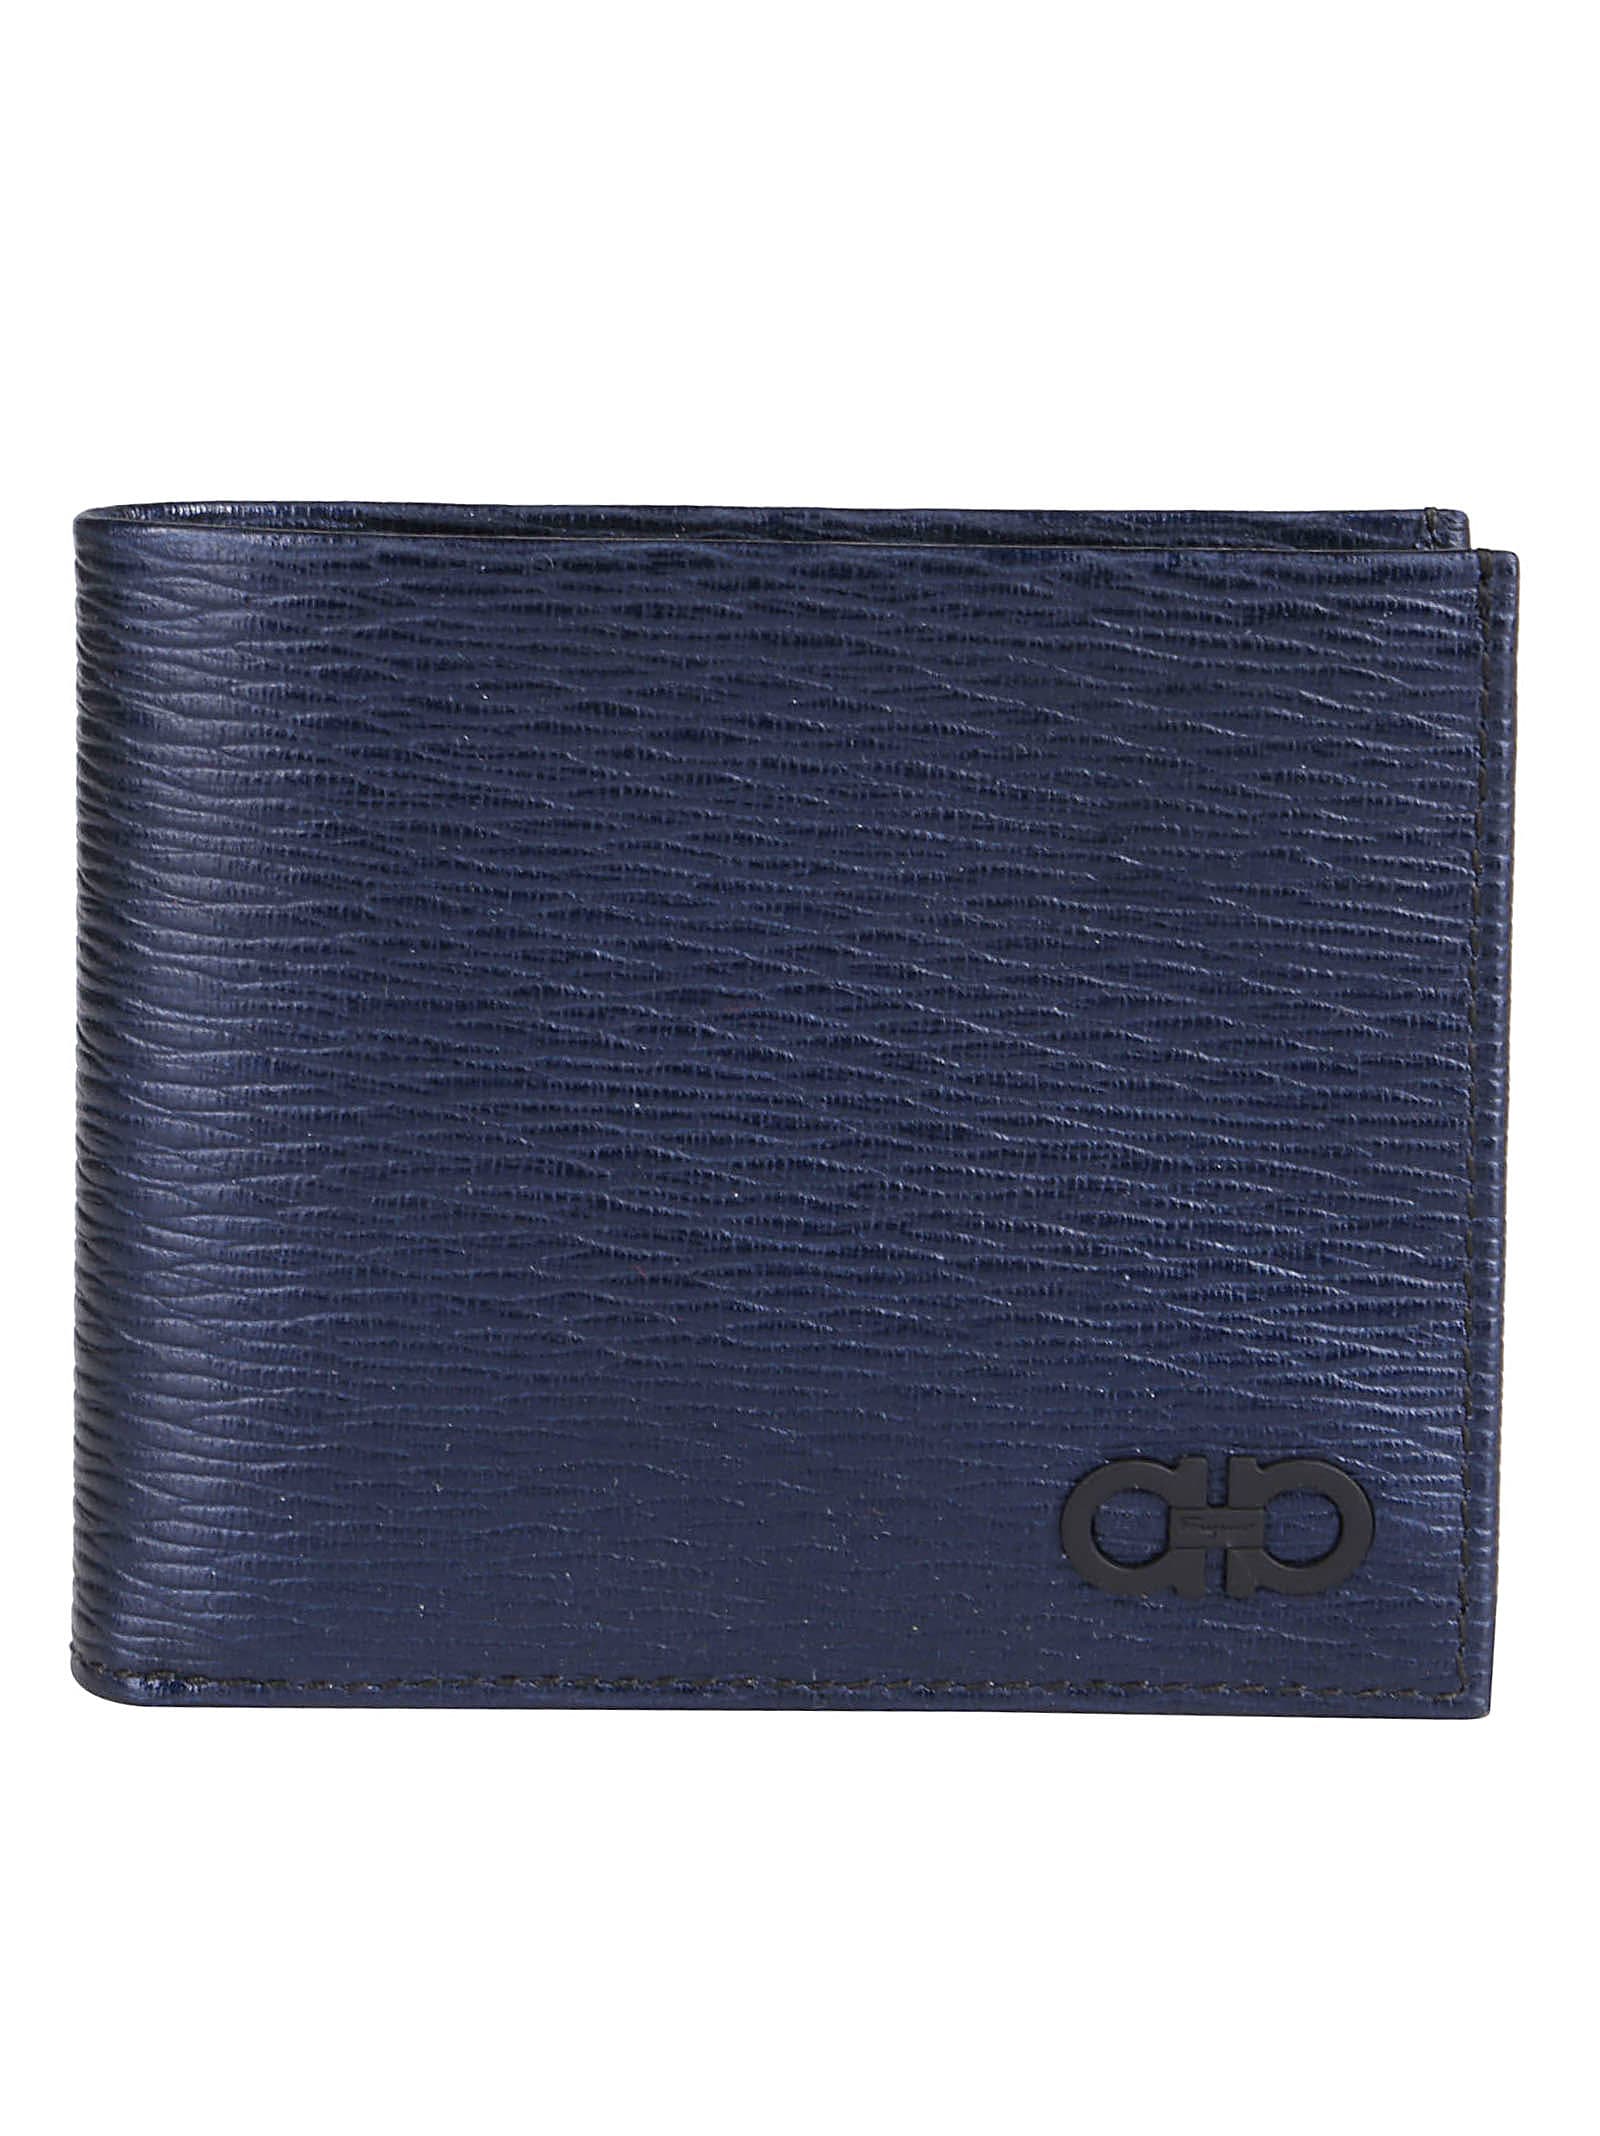 Salvatore Ferragamo Revival Gancini Wallet In Blue | ModeSens